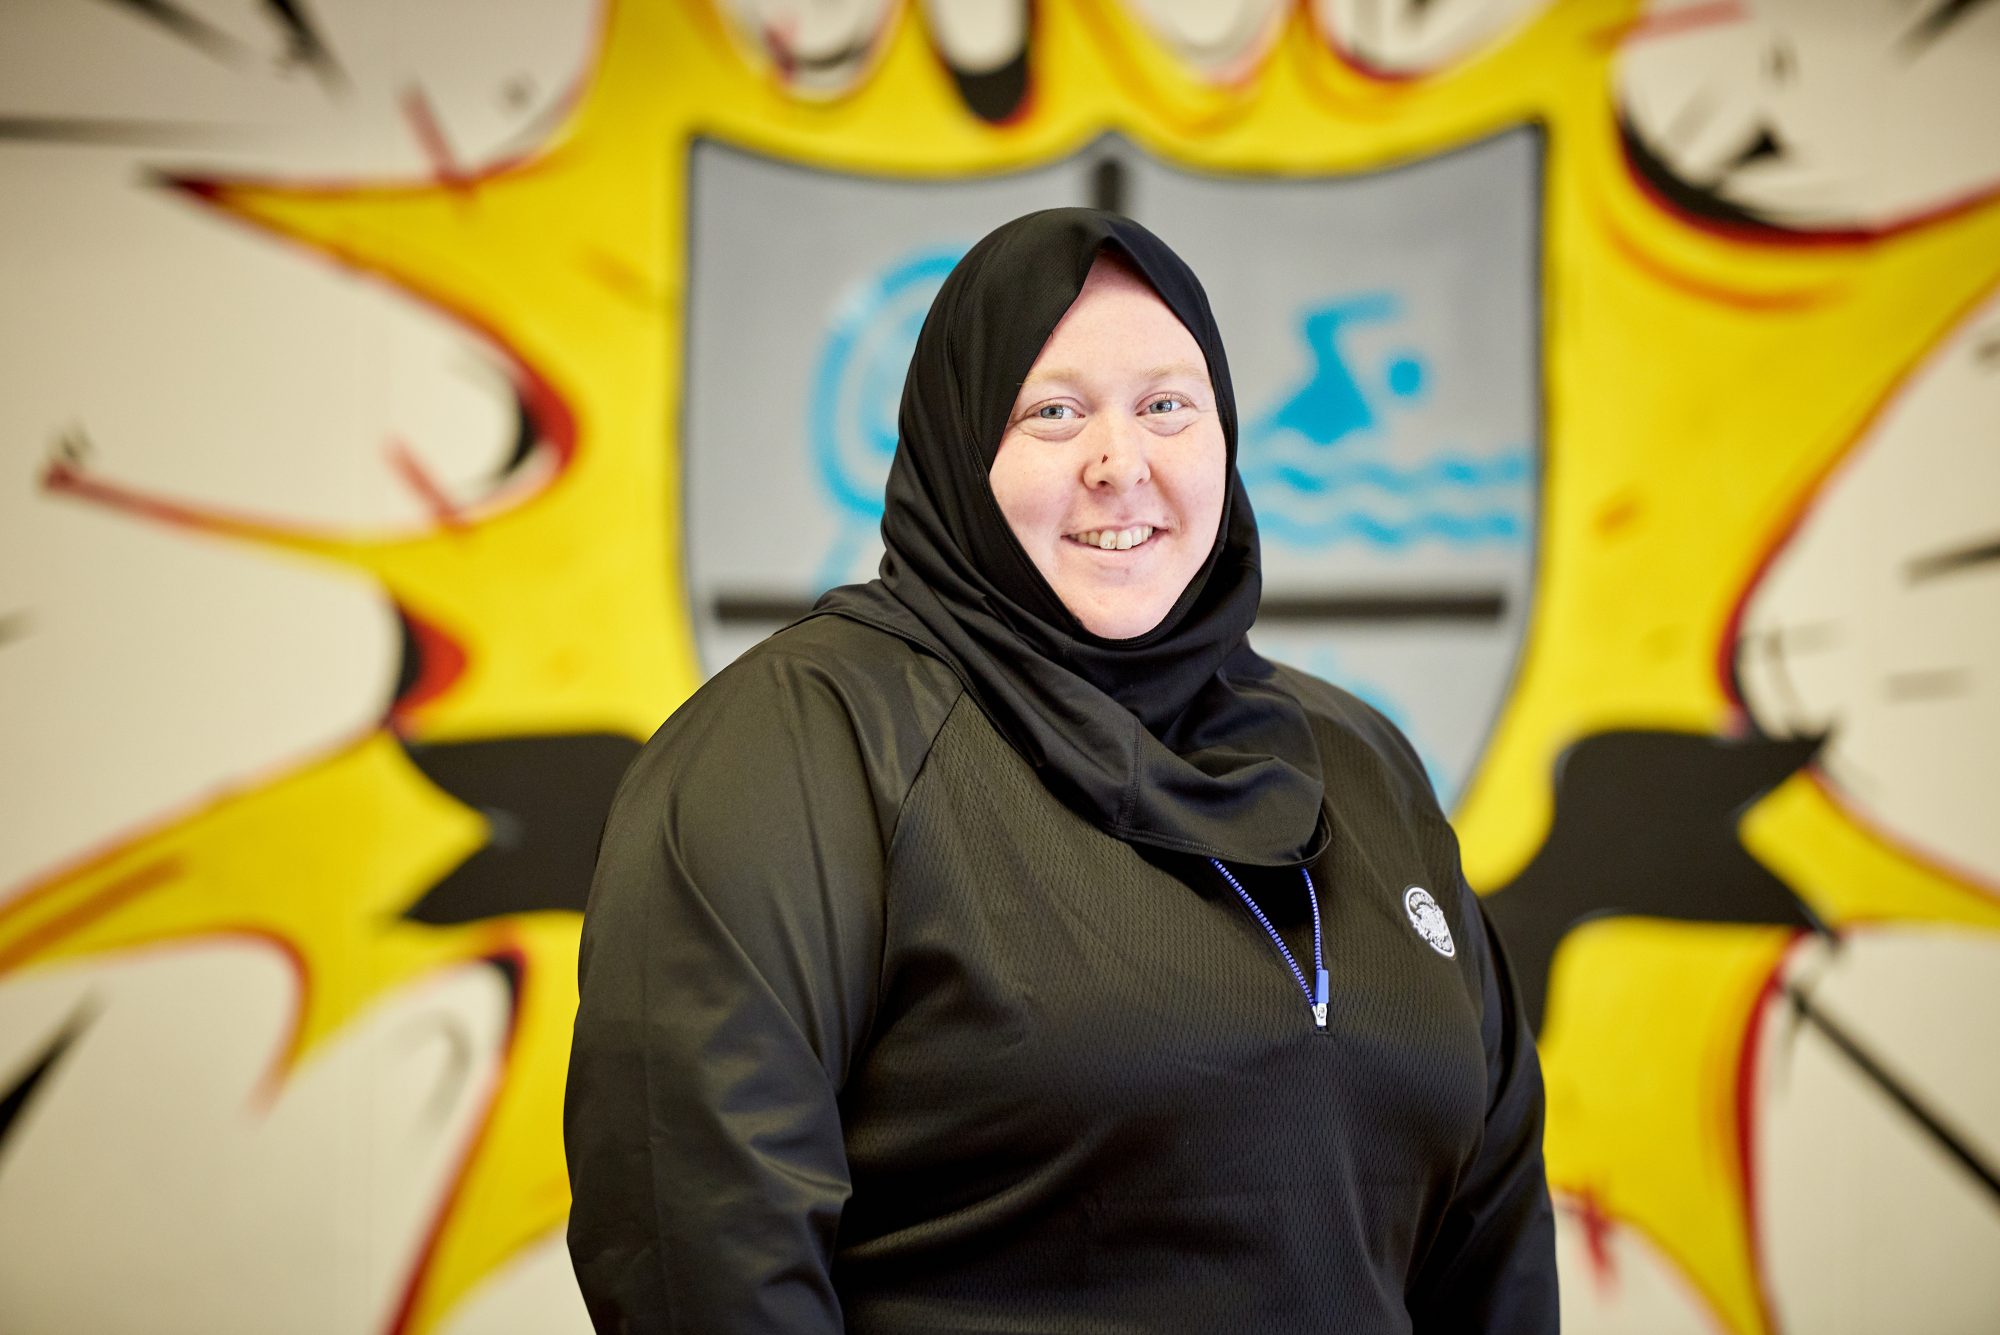 Nalette Tucker, co-founder of Sunnah Sports Academy in Bradford